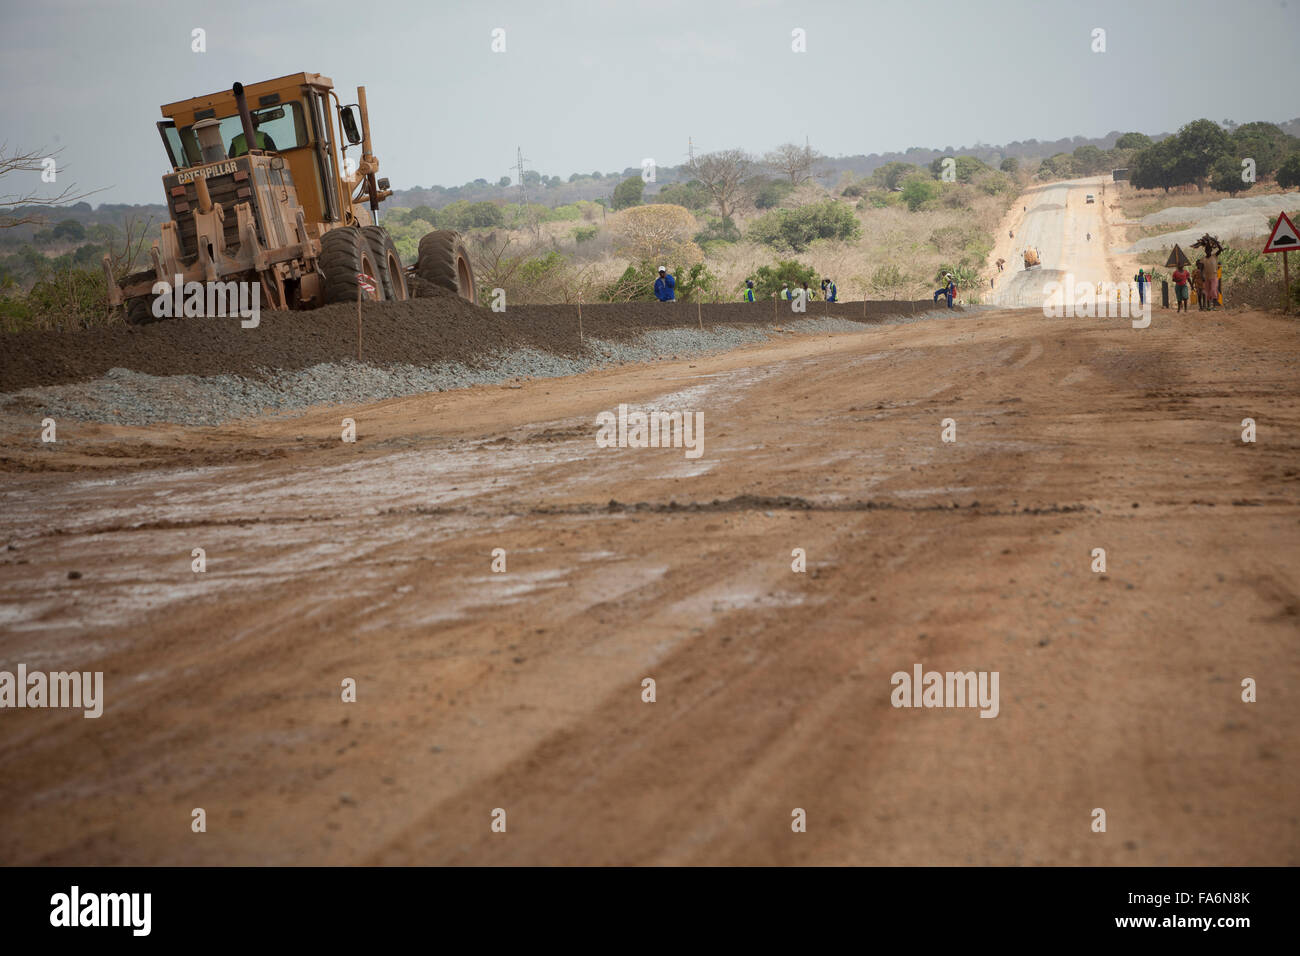 Namialo Rio Lurio Road im Norden Mosambiks erfährt Sanierung und Bau - SE Afrika. Stockfoto